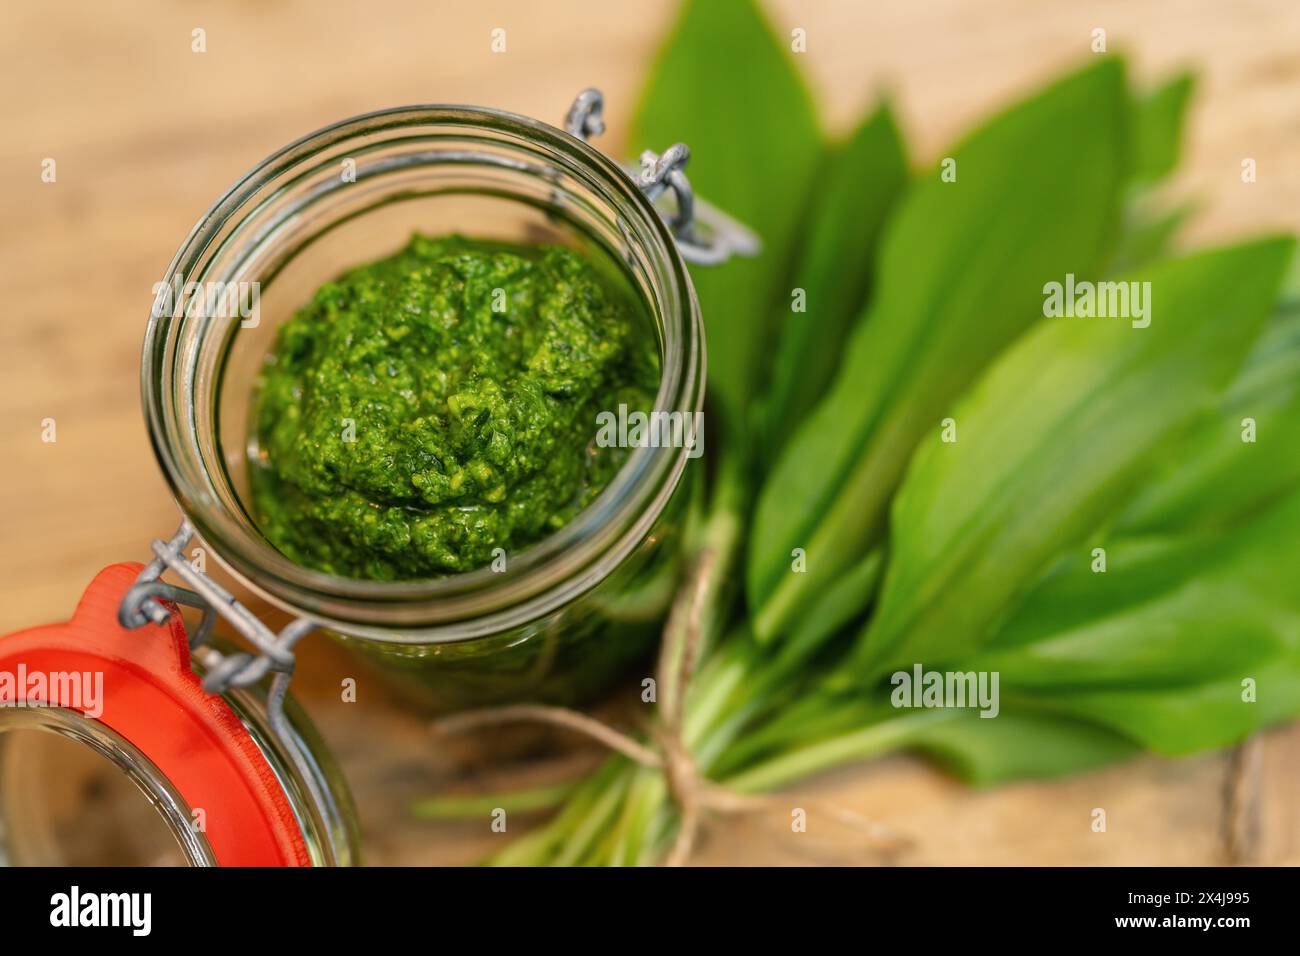 open jar with wild garlic pesto and fresh wild garlic leaves on wood Stock Photo